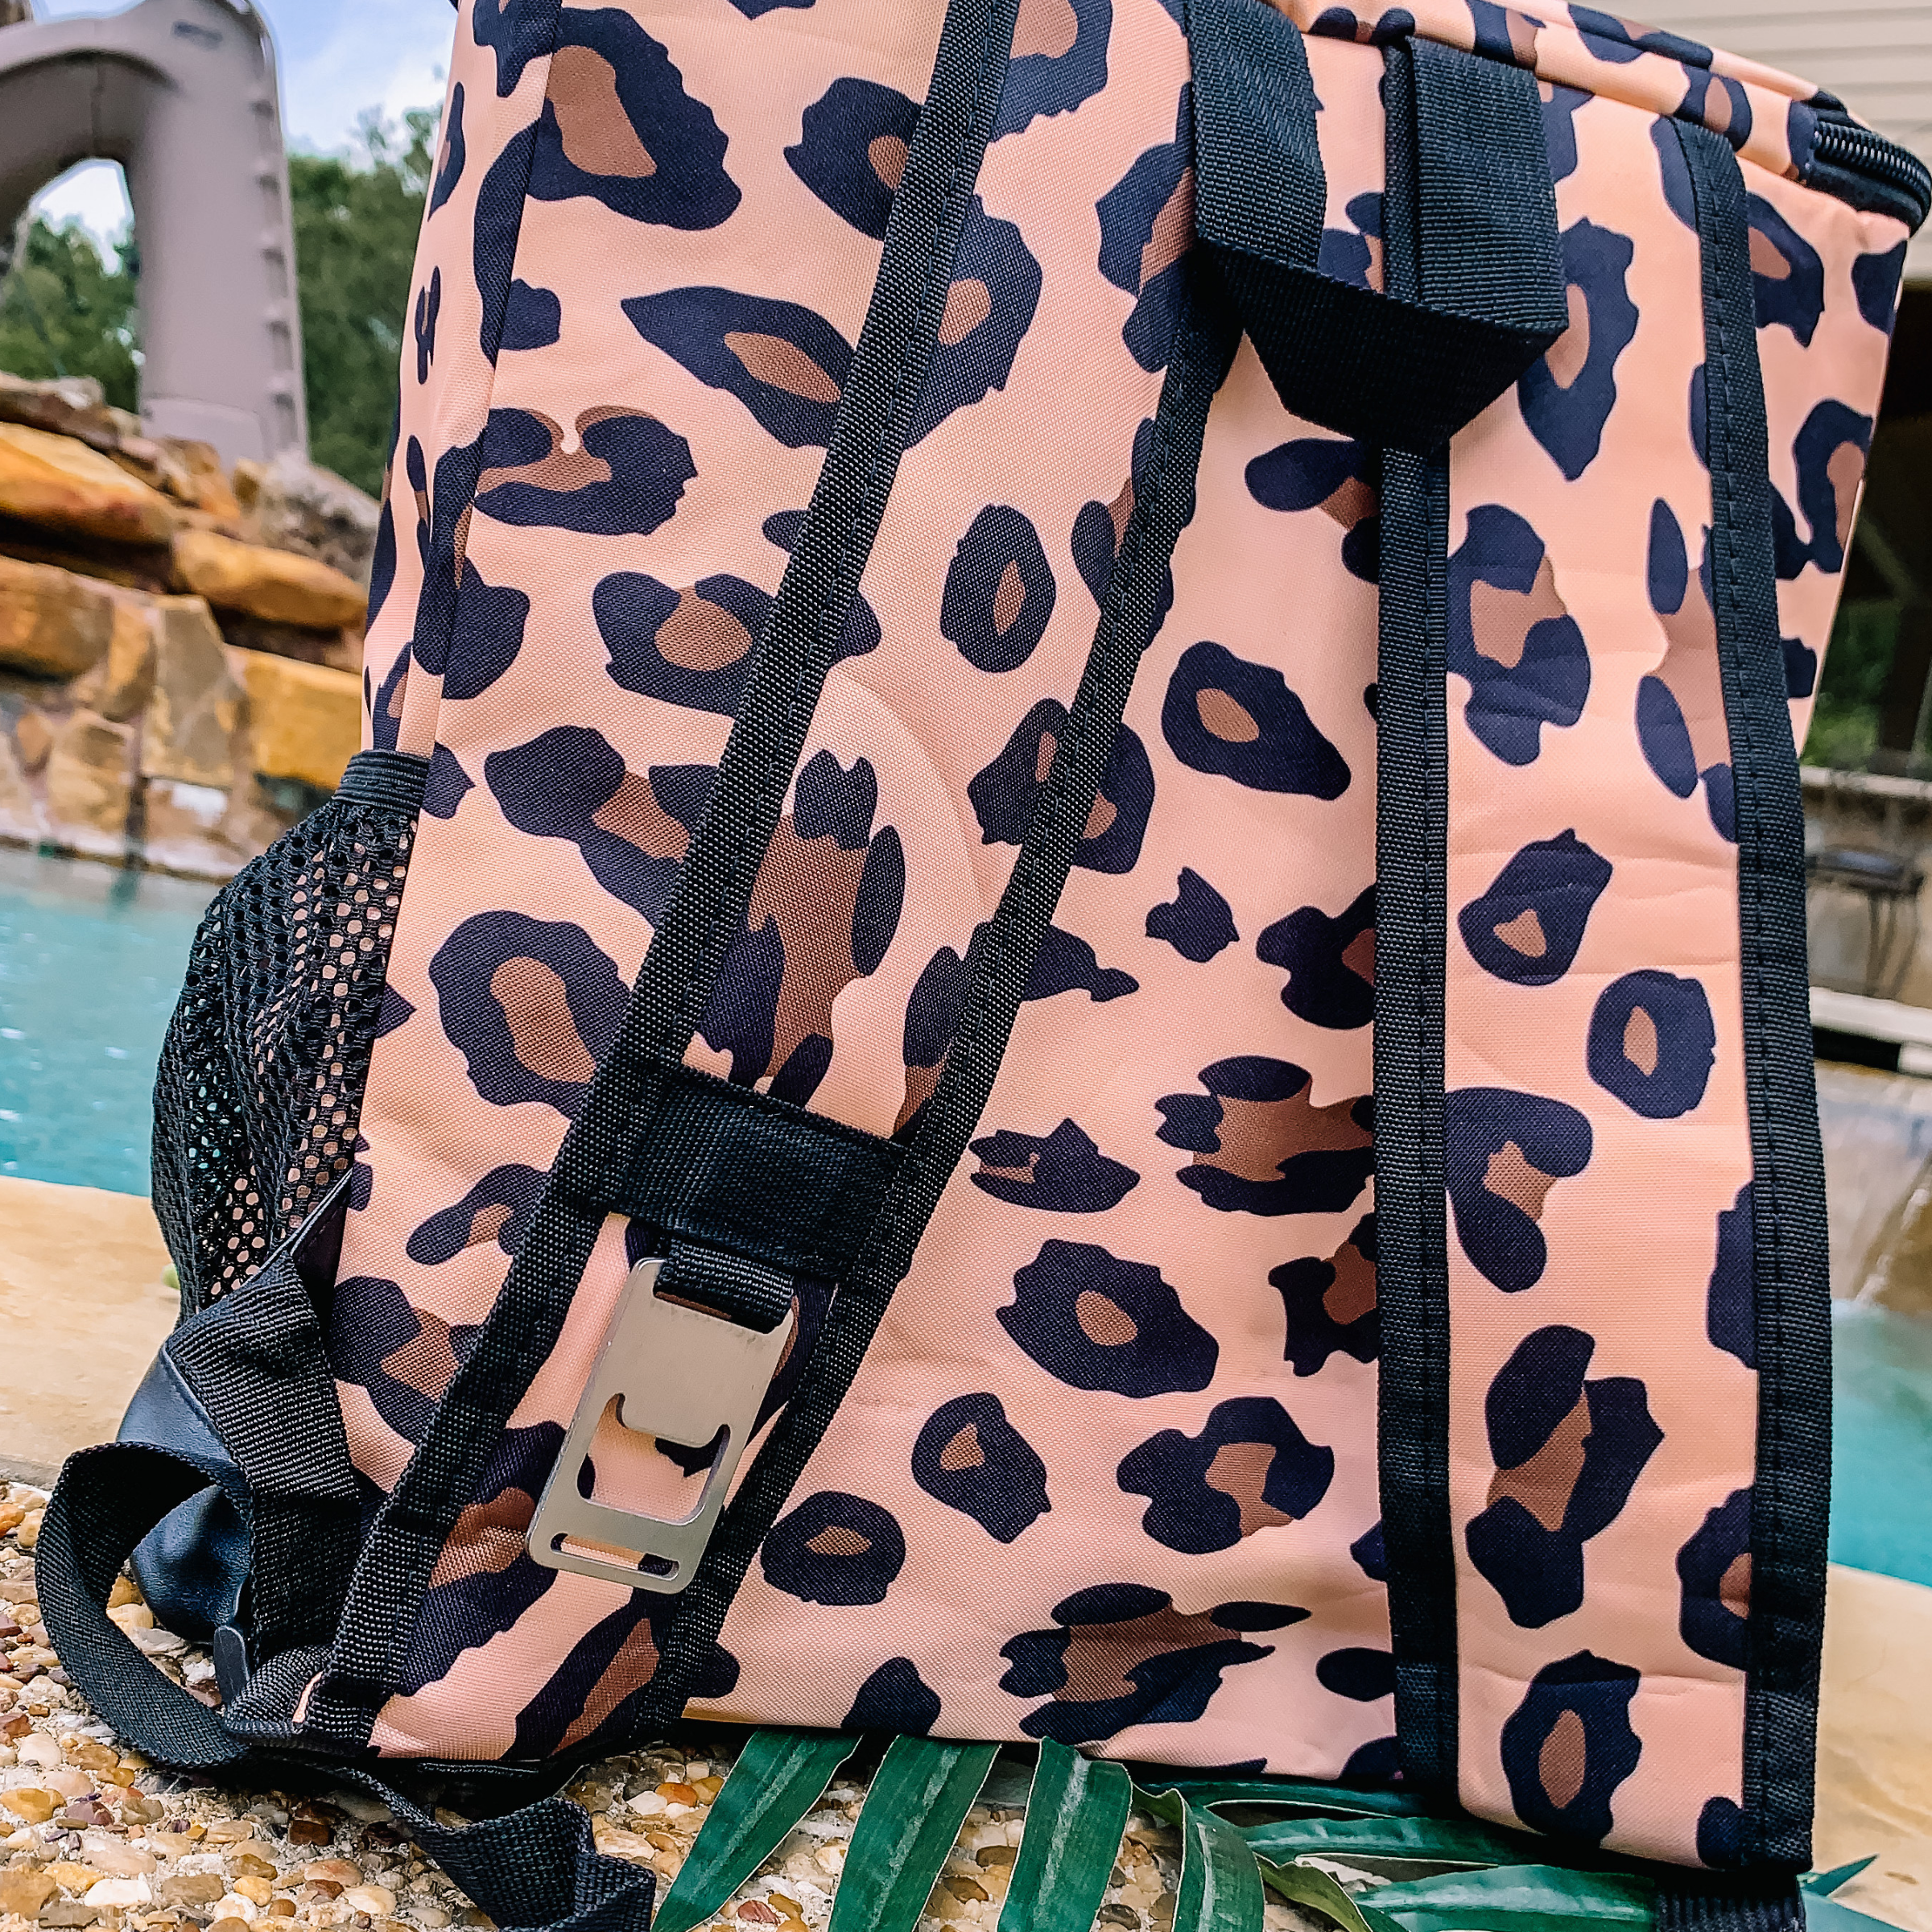 Backpack Cooler in Leopard Print - Giddy Up Glamour Boutique